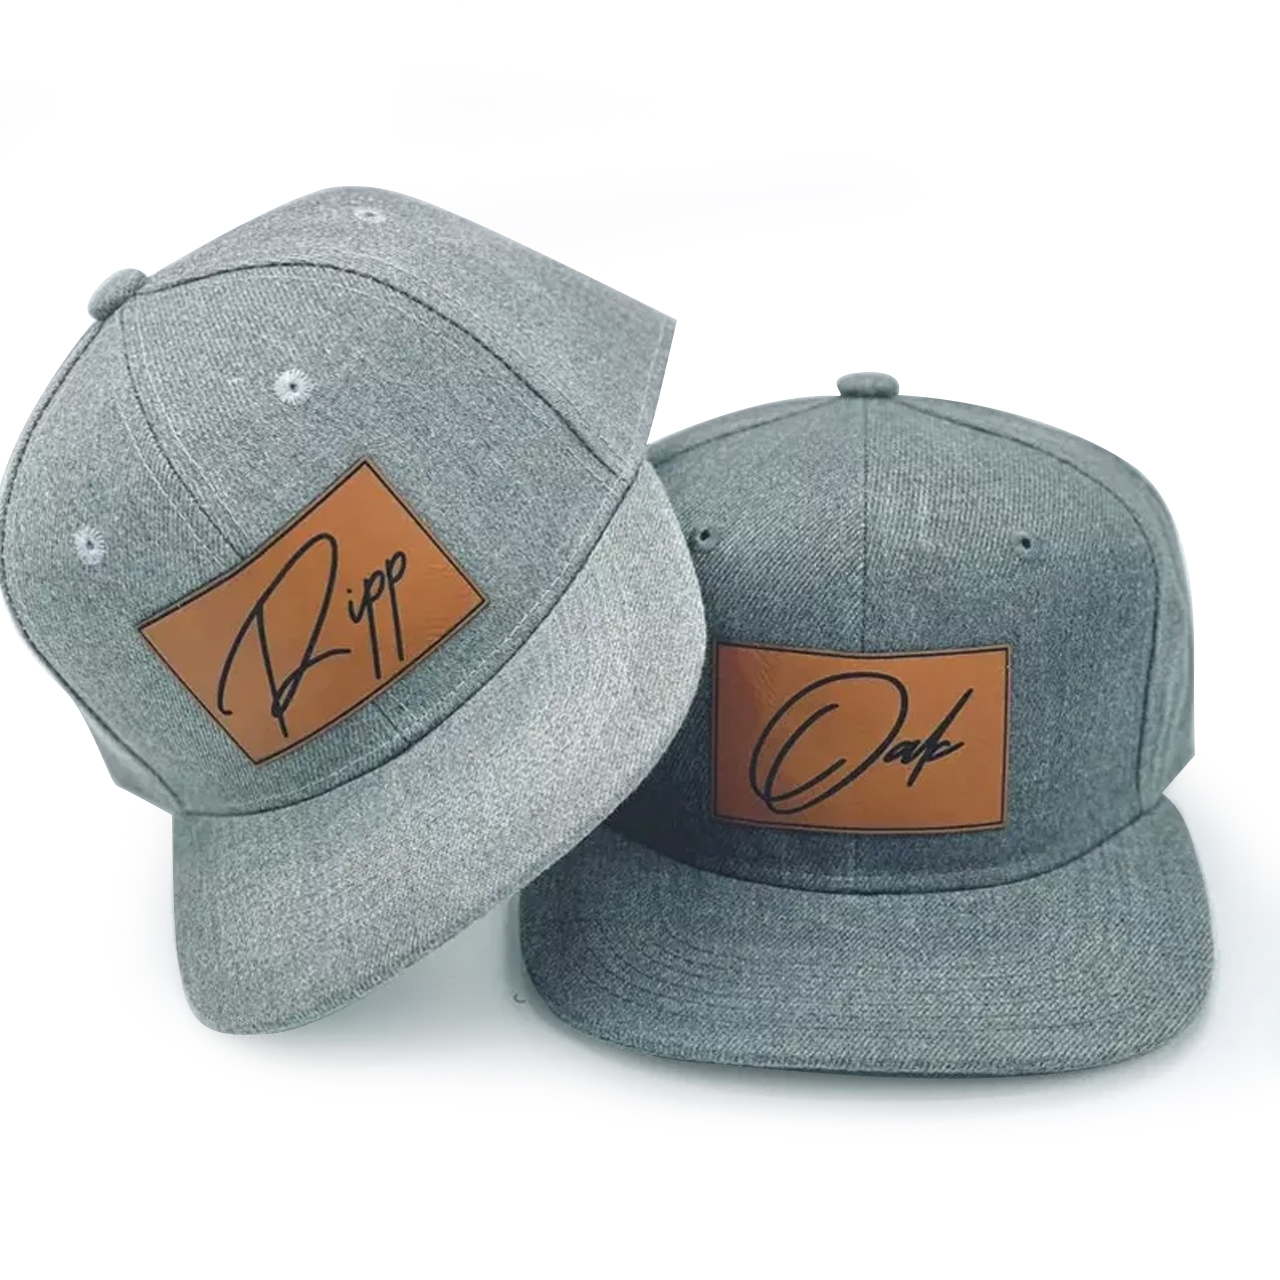  UPF 30+ Snapback Hat Vegan Leather Patch(hats,cap)